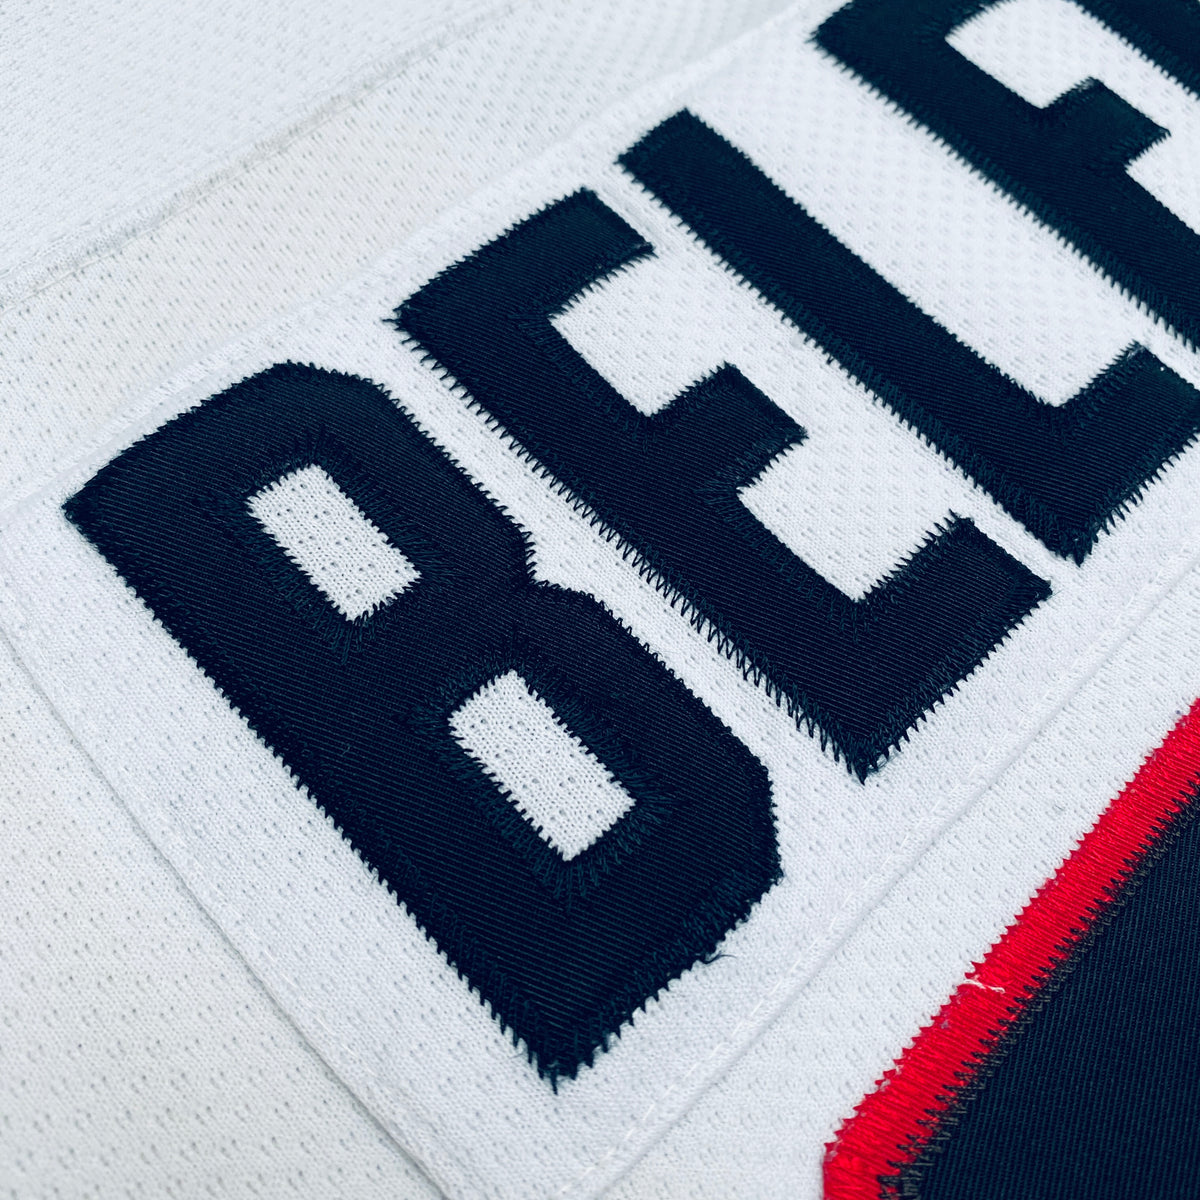 Ed Belfour Chicago Blackhawks Adidas Authentic Away NHL Vintage